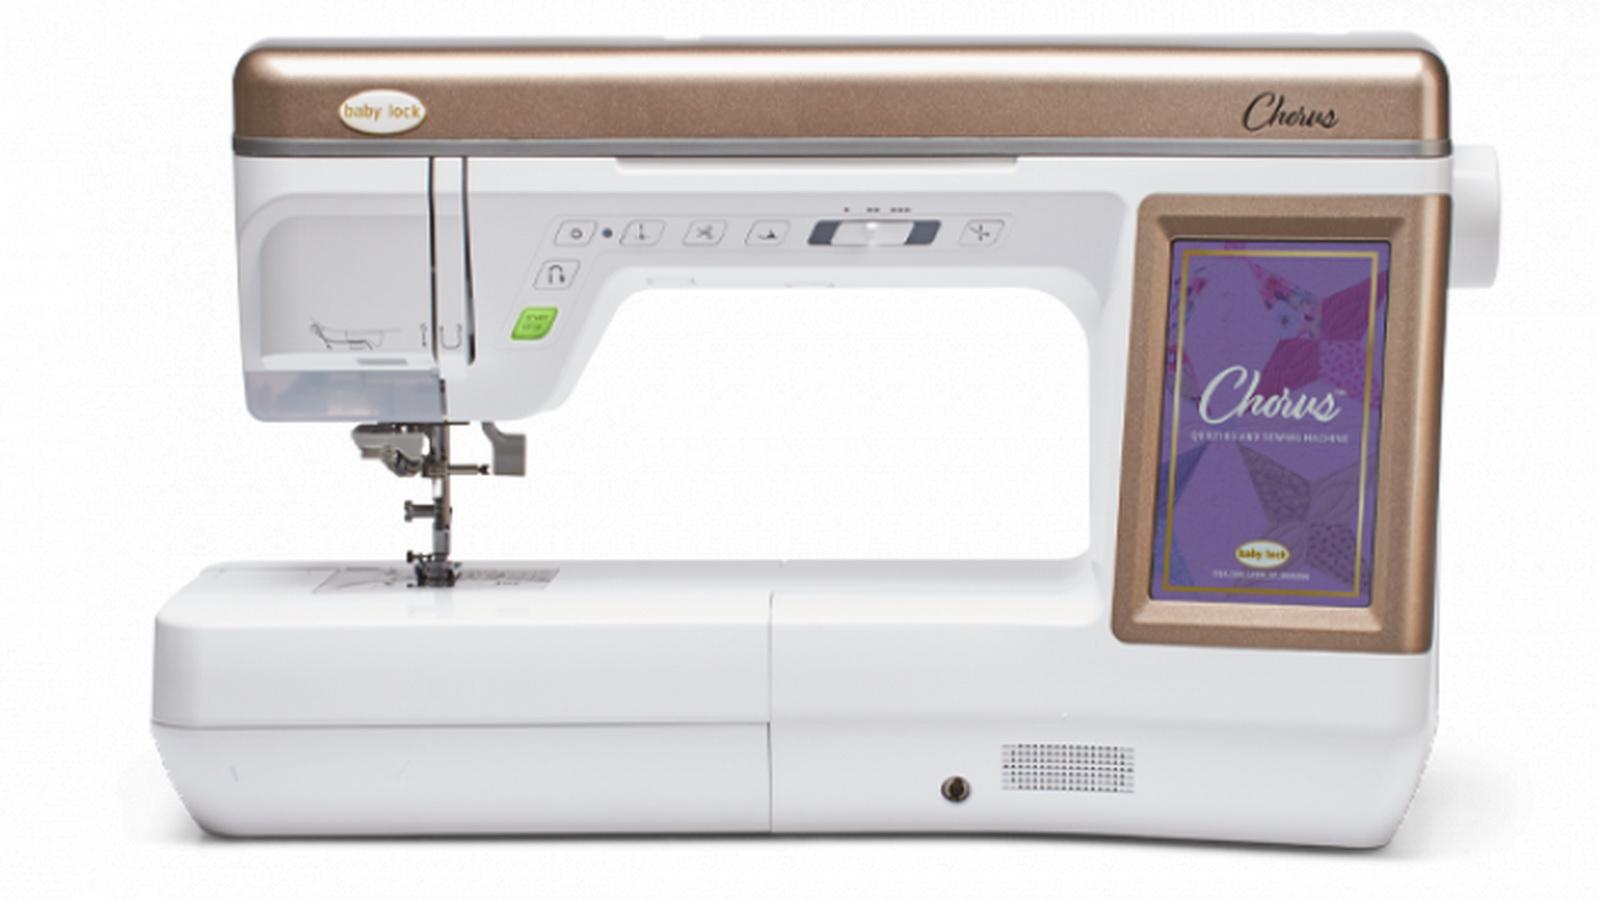 Soprano baby lock sewing machine - arts & crafts - by owner - sale